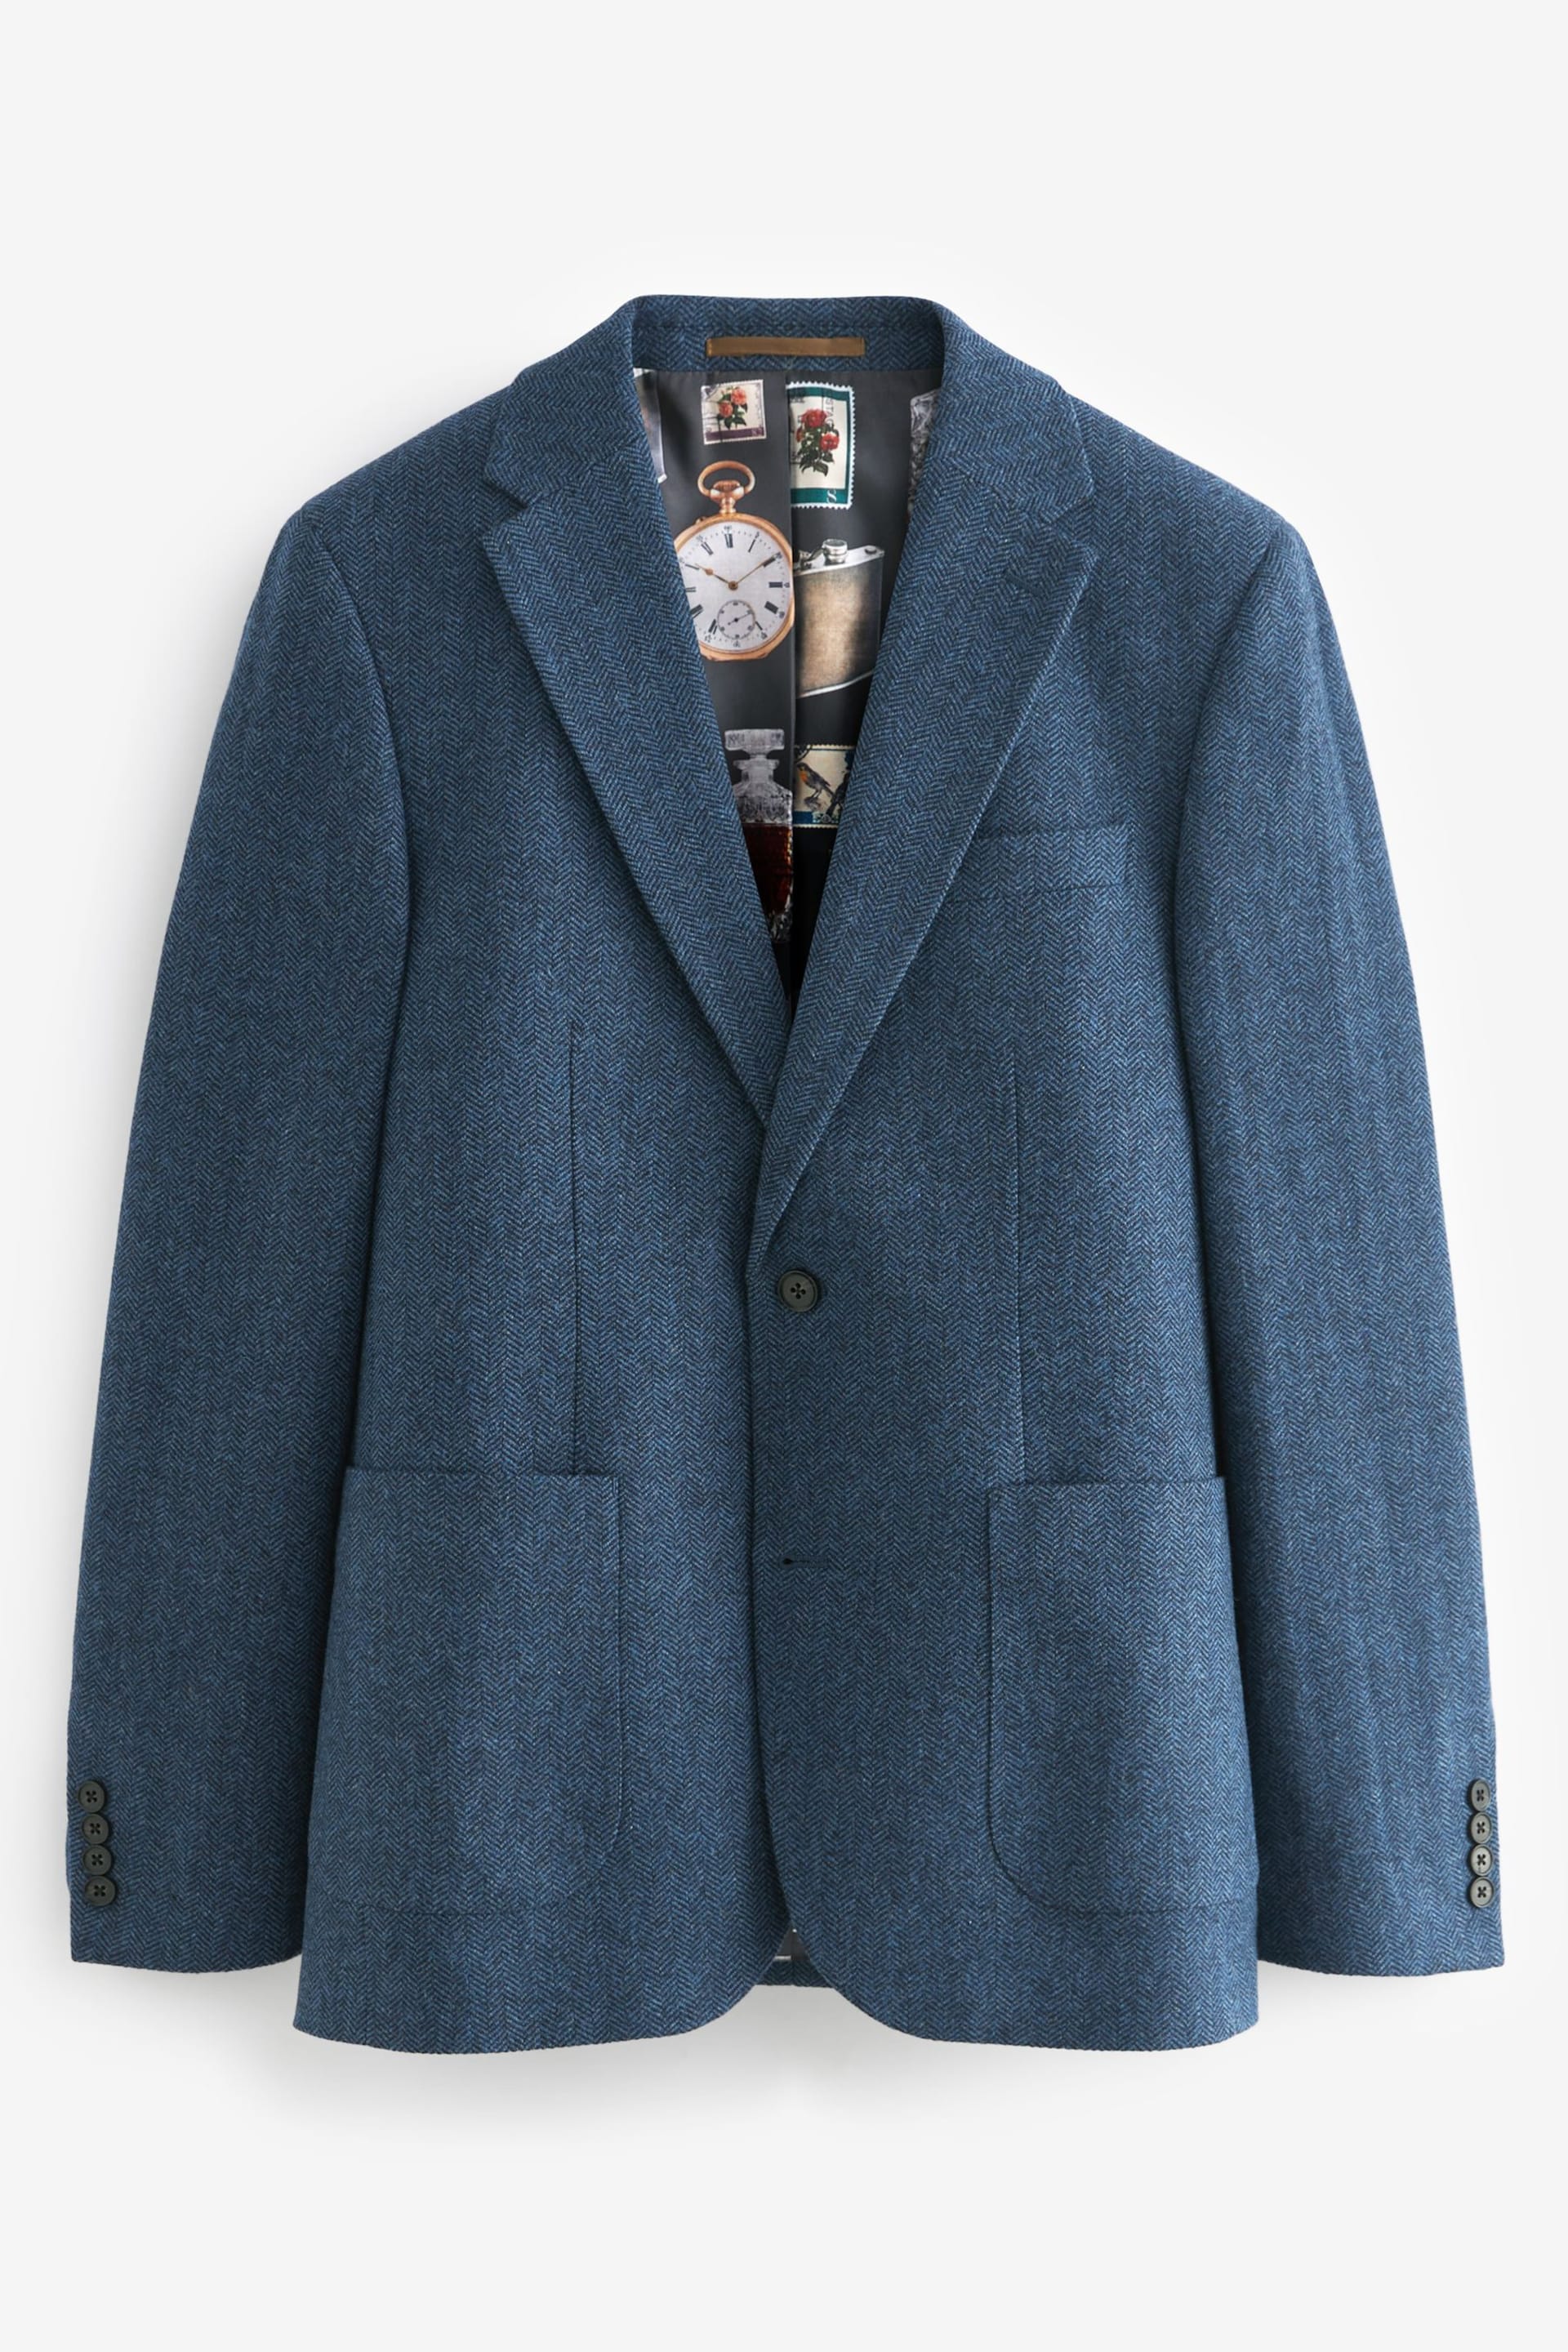 Bright Blue Slim Fit Nova Fides Wool Blend Herringbone Suit Jacket - Image 5 of 9